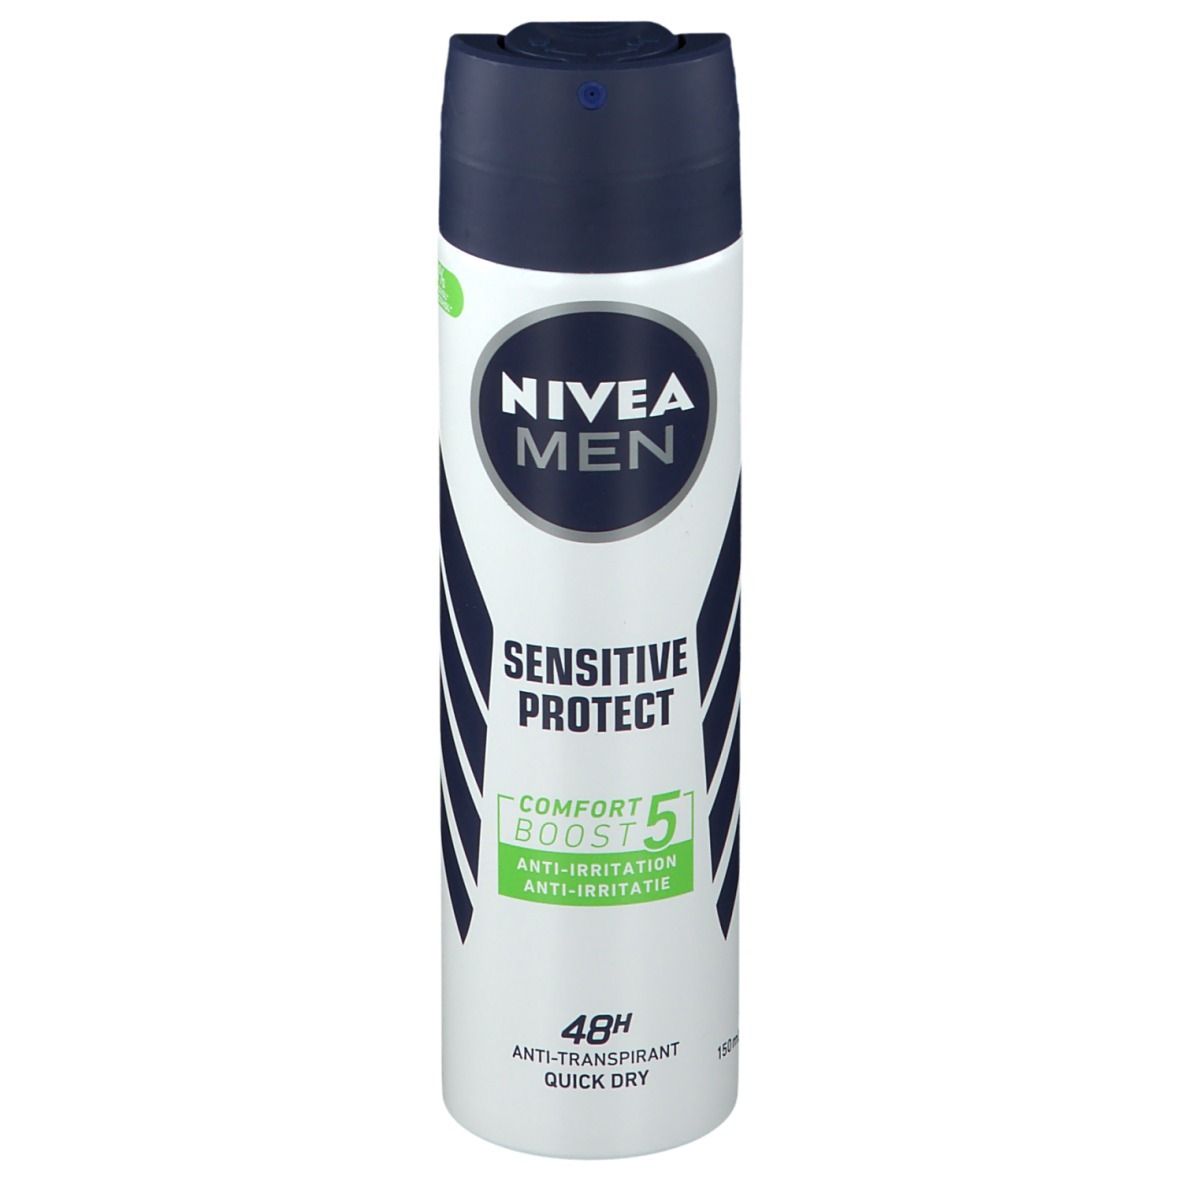 Nivea MEN Sensitive Protect Déodorant Spray 48h